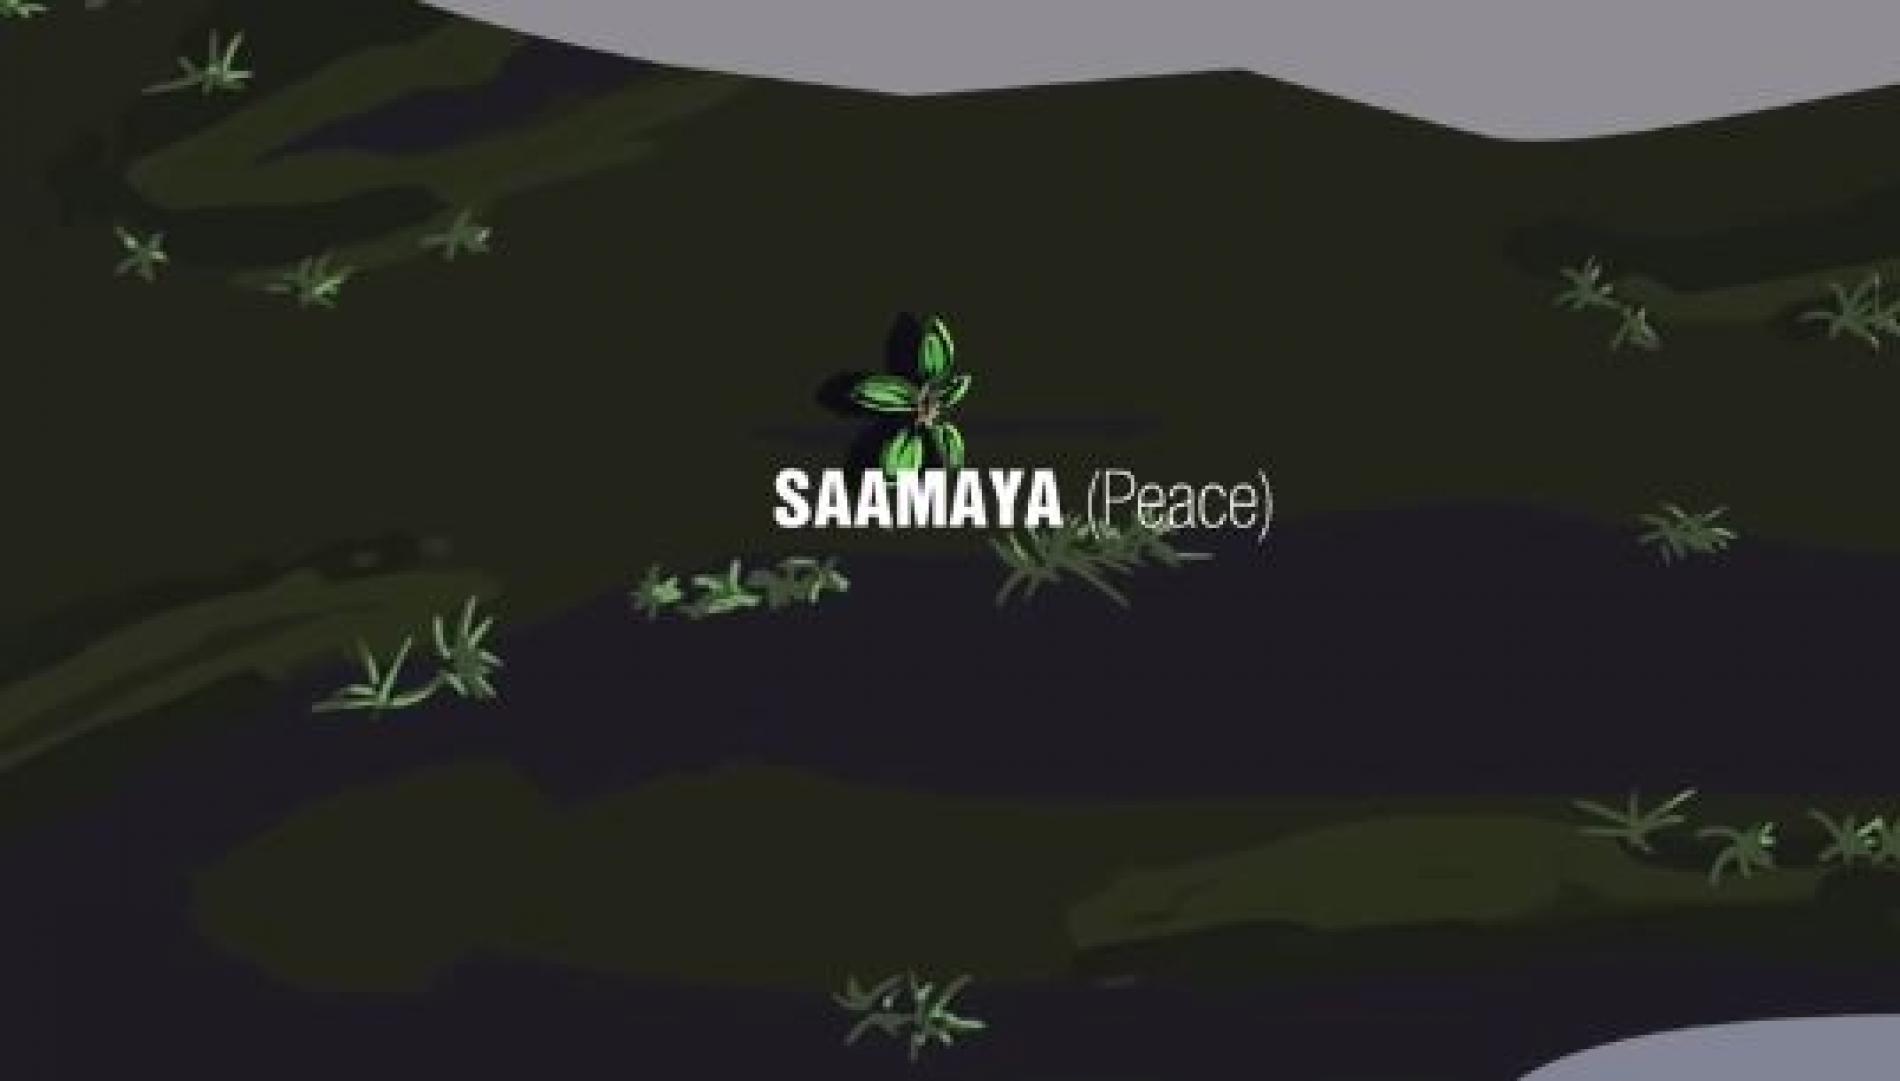 New Music : Saamaya (සාමය) – Ranji Wickremasinghe (Official Music Video)